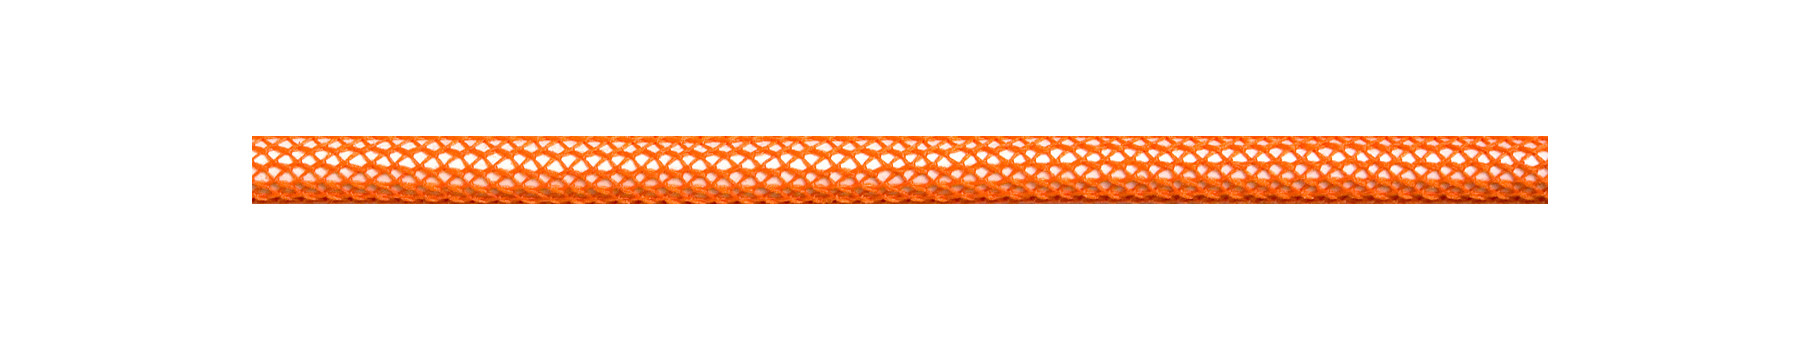 Textile Cable Orange Netlike Textile Covering